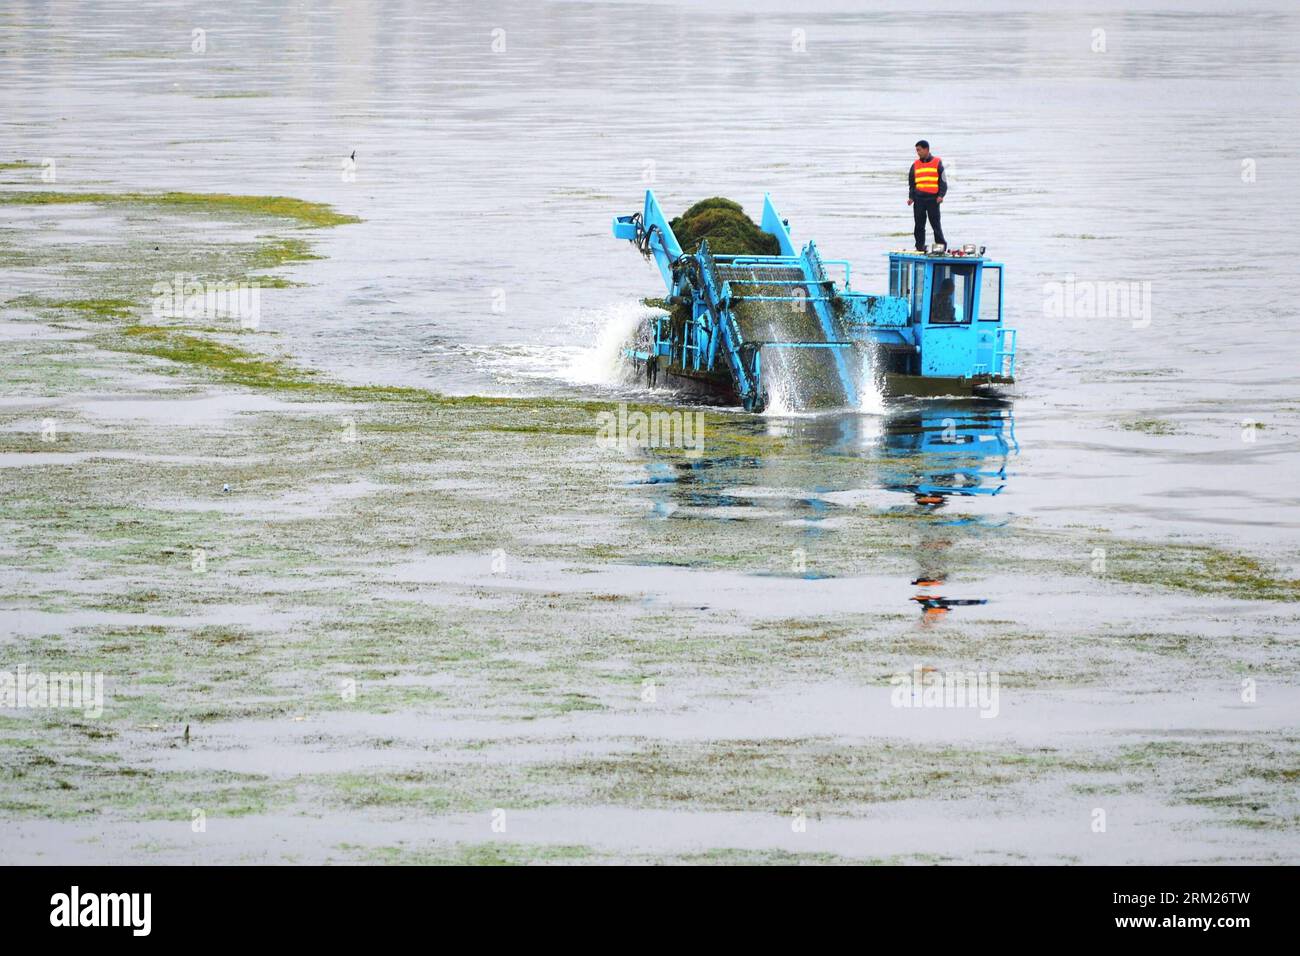 Bildnummer: 59720281 Datum: 28.05.2013 Copyright: imago/Xinhua membri dell'ente locale per l'acqua pulire le erbacce da acqua sovracoltivate con una macchina per migliorare l'ambiente del fiume Haihe nel comune di Tianjin, Cina settentrionale, 28 maggio 2013. (Xinhua/Wang Xiaoming) (wqq) CHINA-TIANJIN-HAIHE RIVER-WATERWEEDS (CN) PUBLICATIONxNOTxINxCHN Gesellschaft x2x xkg 2013 quer o0 Ökologie Wasser, Algen Algenpest 59720281 Data 28 05 2013 Copyright Imago XINHUA membri della Local Water Authority Clear Overgrown Waterweeds with a Machine to Improving the Environment of the Haihe River in Tianjin Municipal Foto Stock